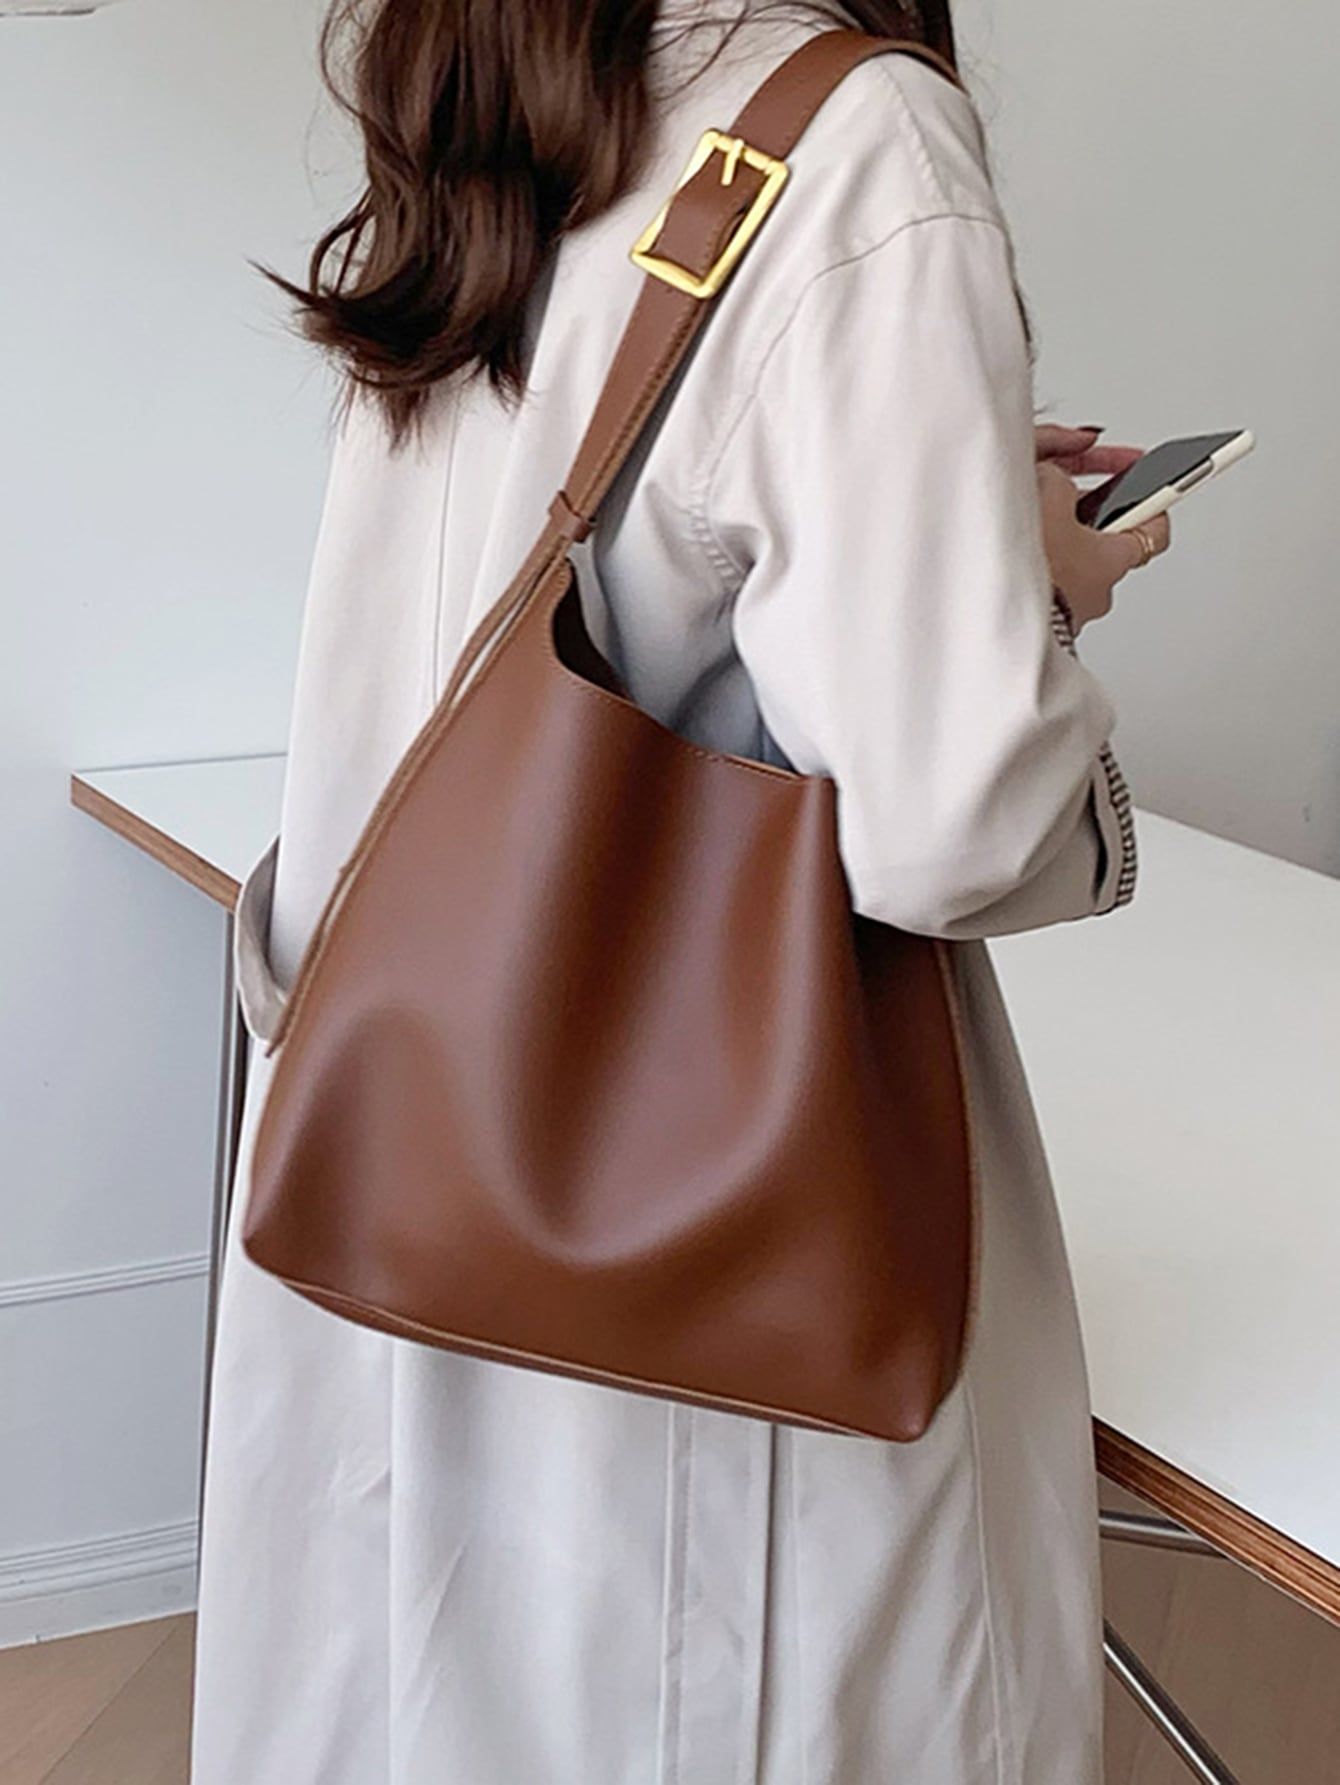 Make Stylish look and sunshine personality with hobo bag